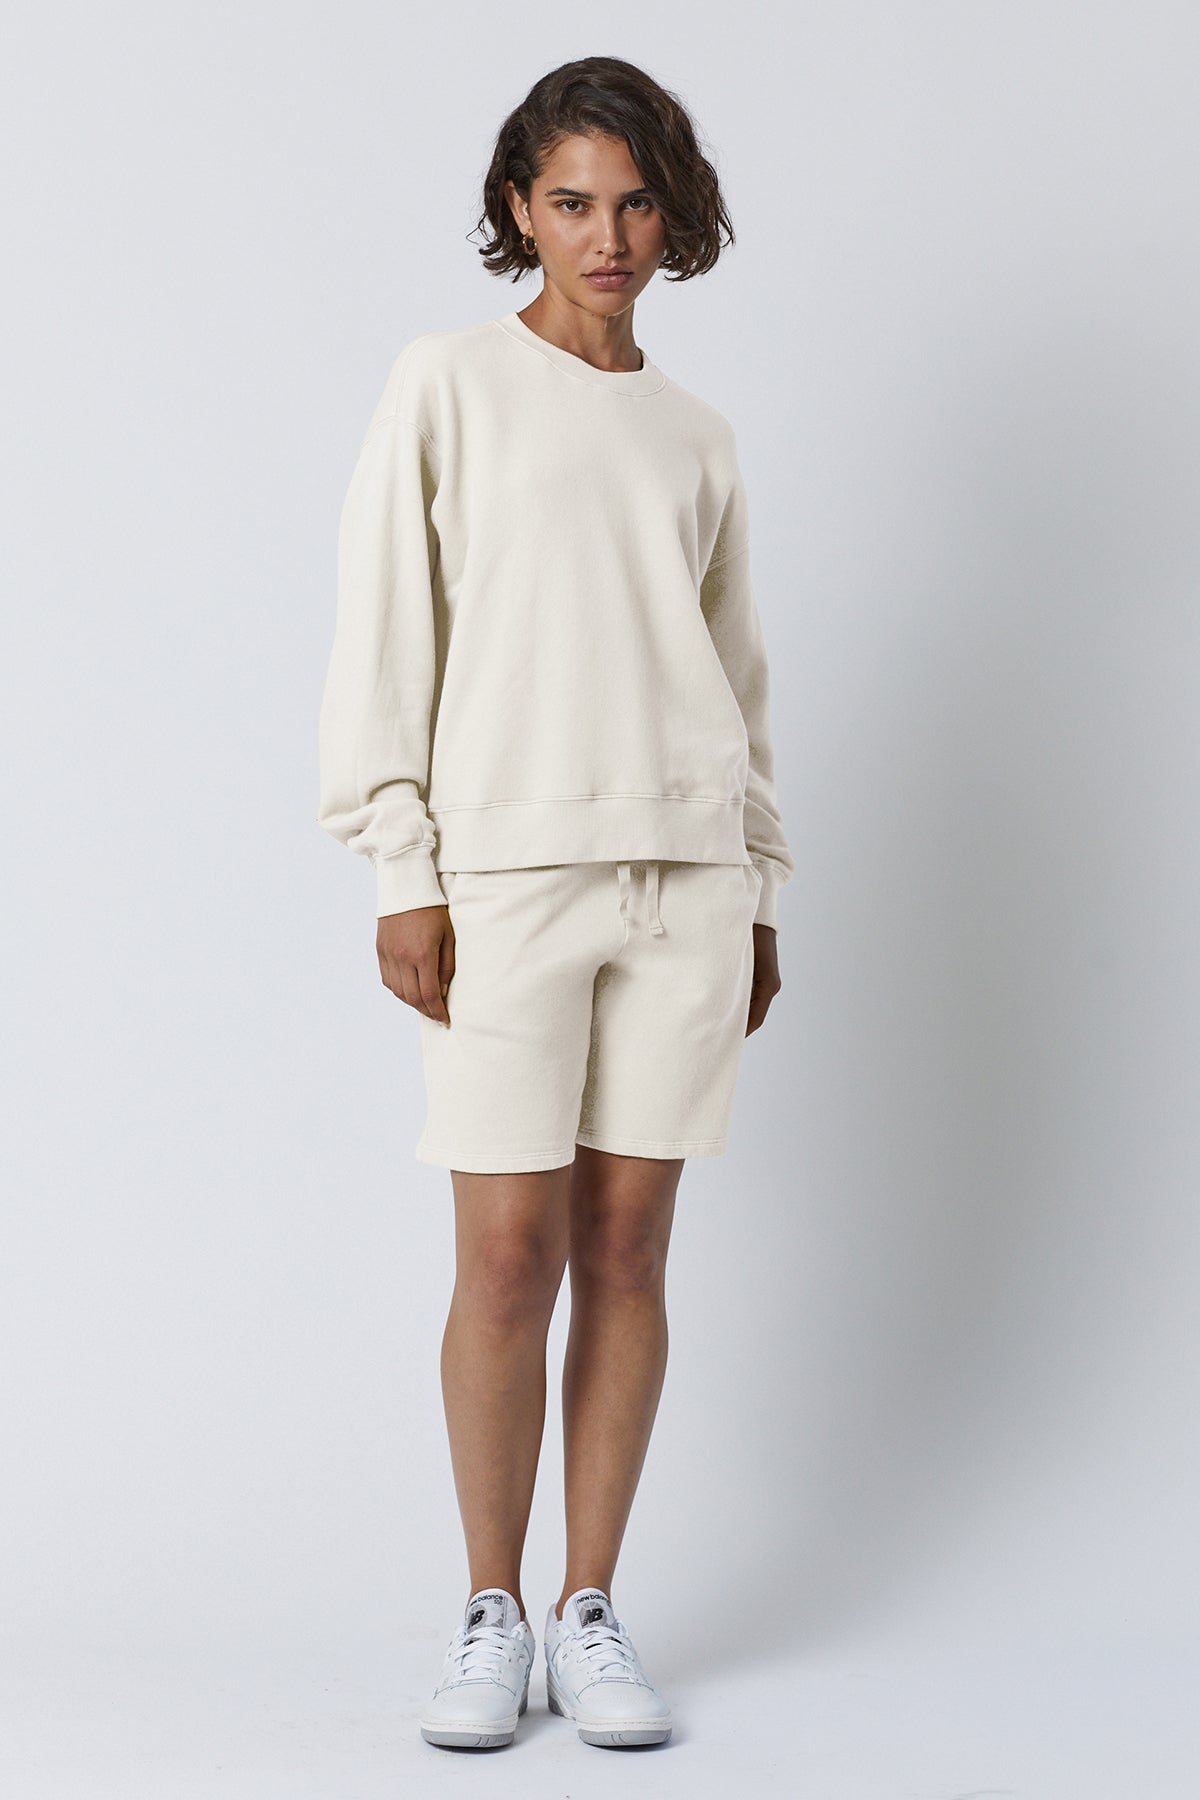   The model is wearing a Velvet by Jenny Graham LAGUNA SWEATSHORT and shorts. 